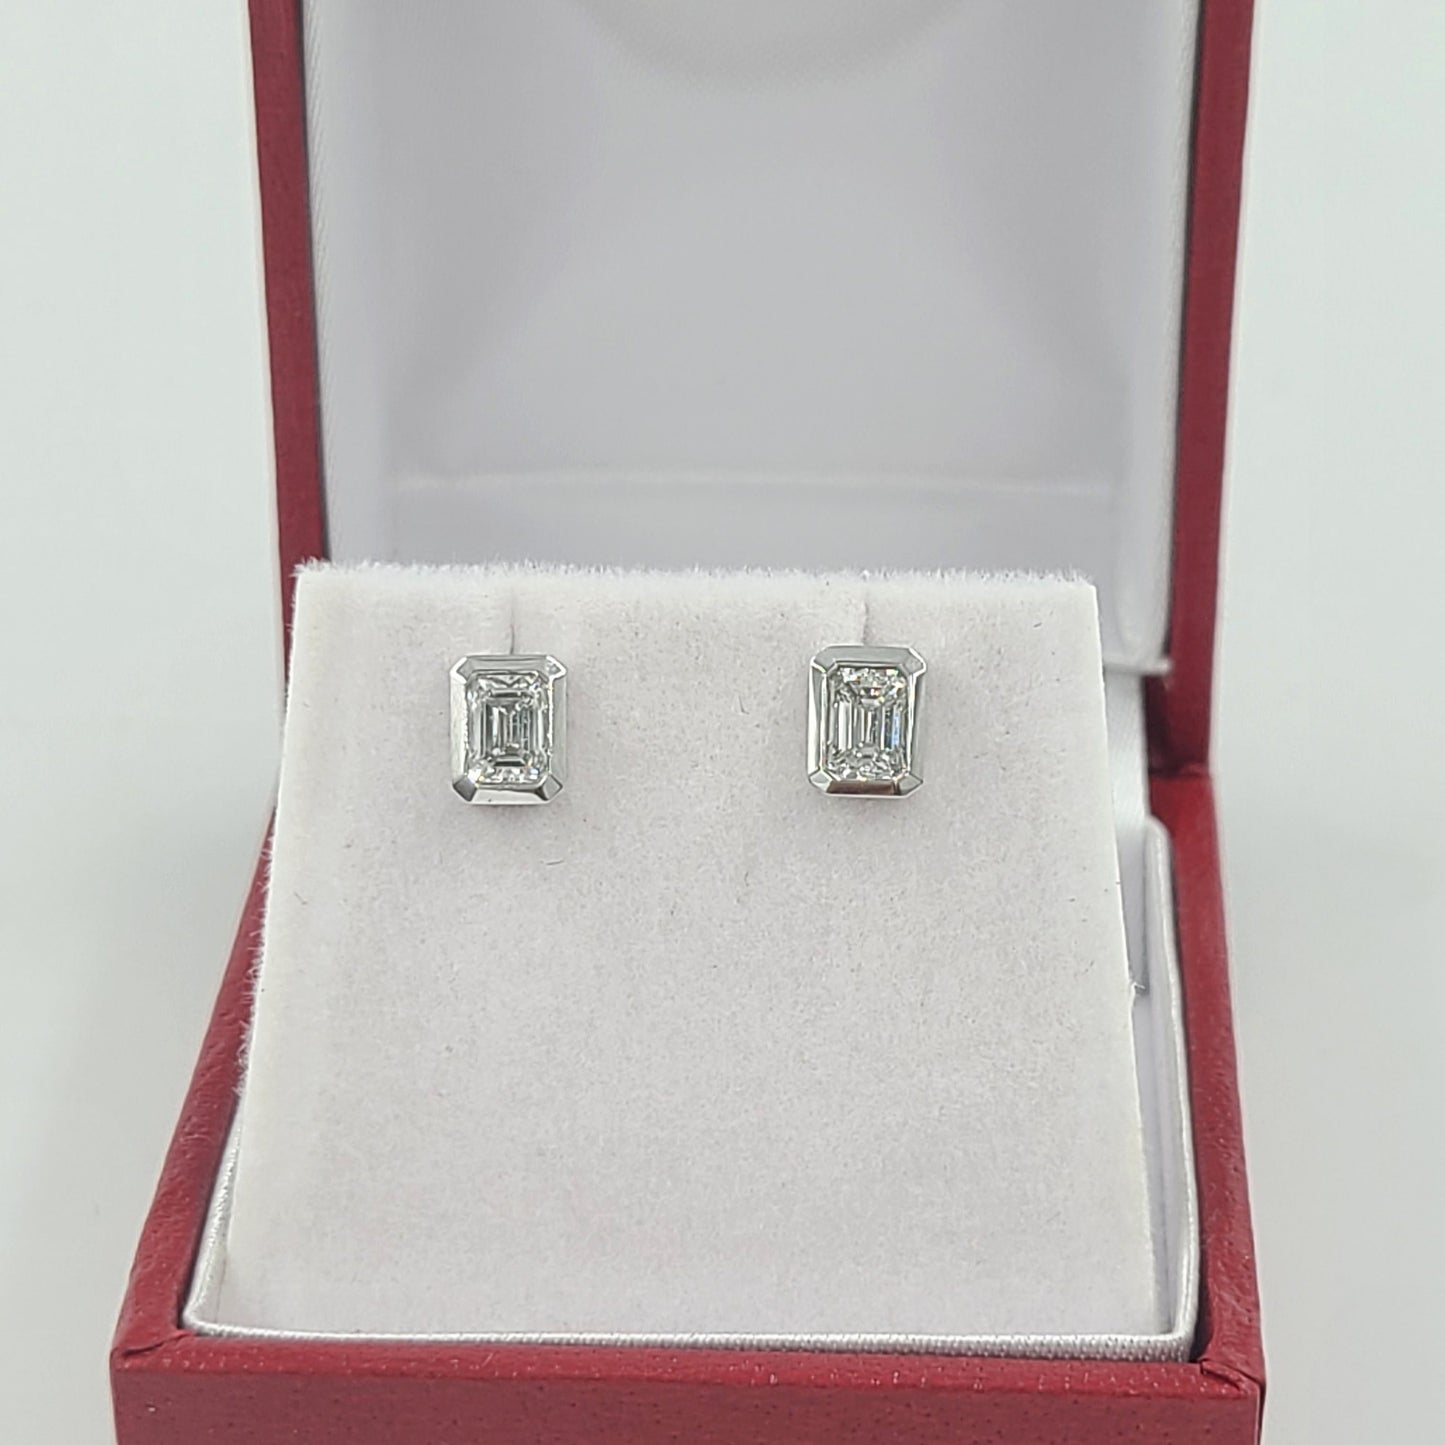 Emerald Cut Diamond 0.6ct Solitaire Bezel Set Earrings / Anniversary gift /1 00% Natural Diamond Earrings / Gift for her Stud Earrings